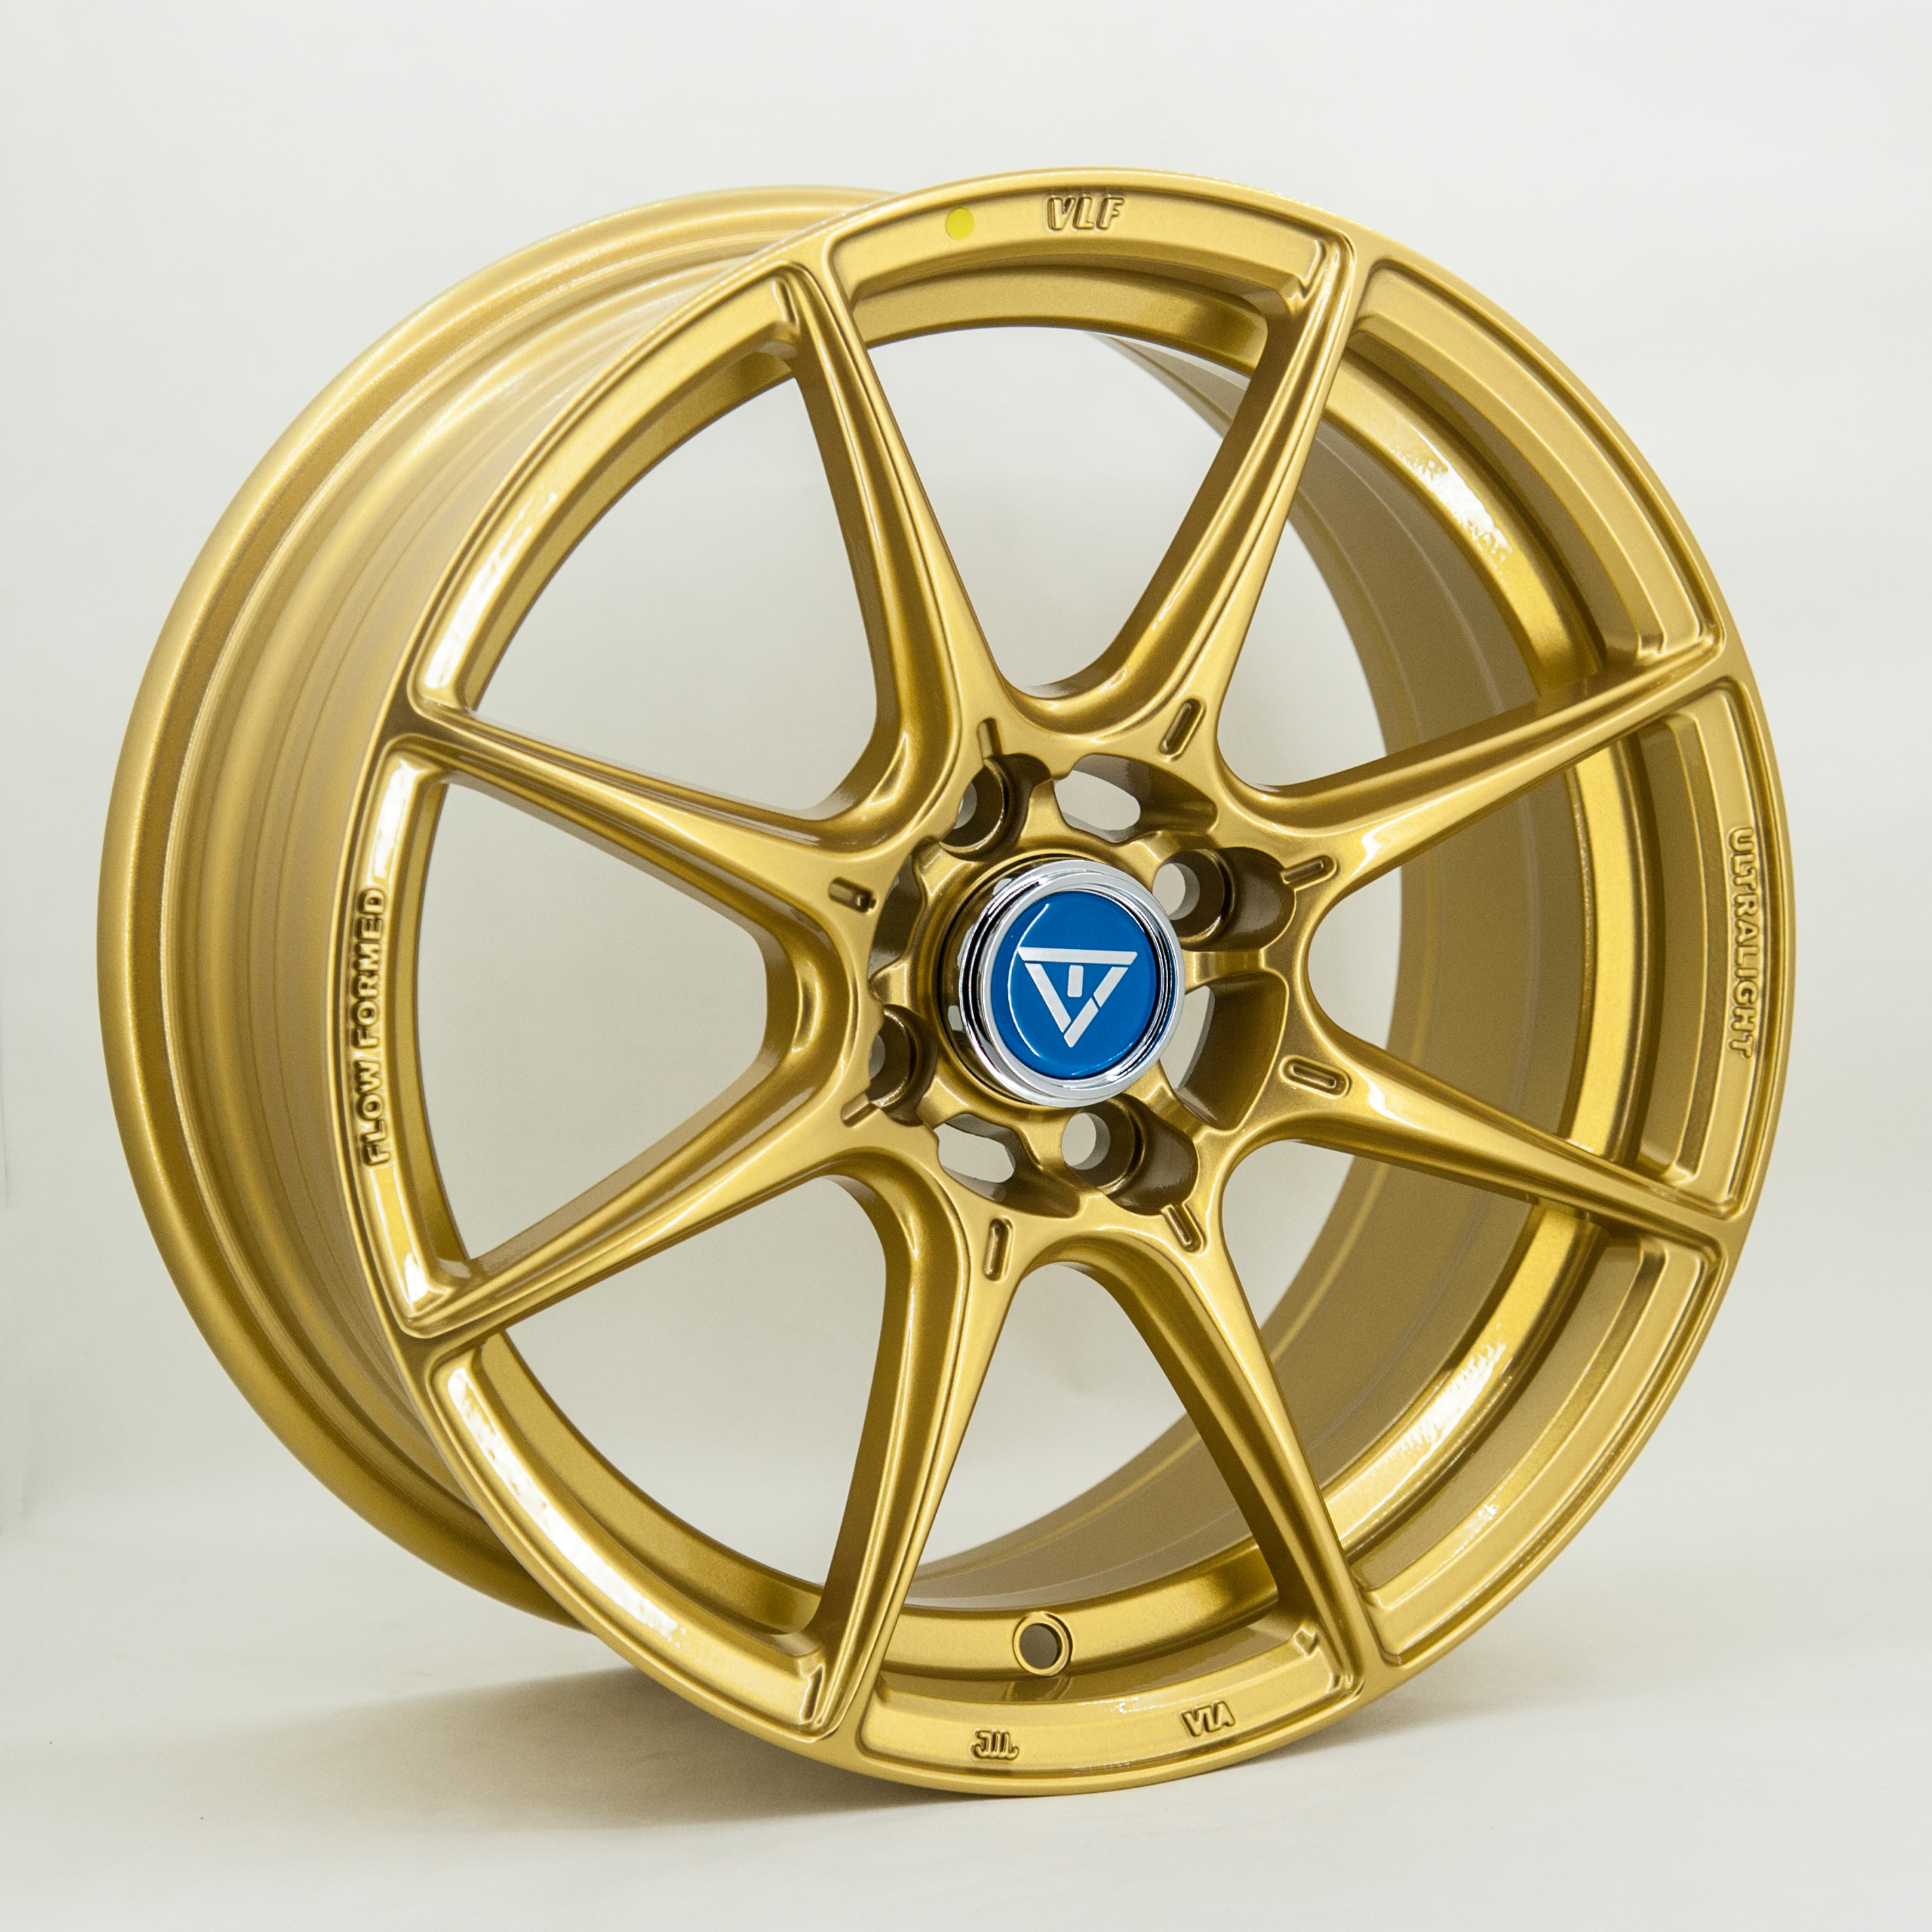 Gt VLF02 6.5x15 4x100 ET35 DIA 73.1 Gold